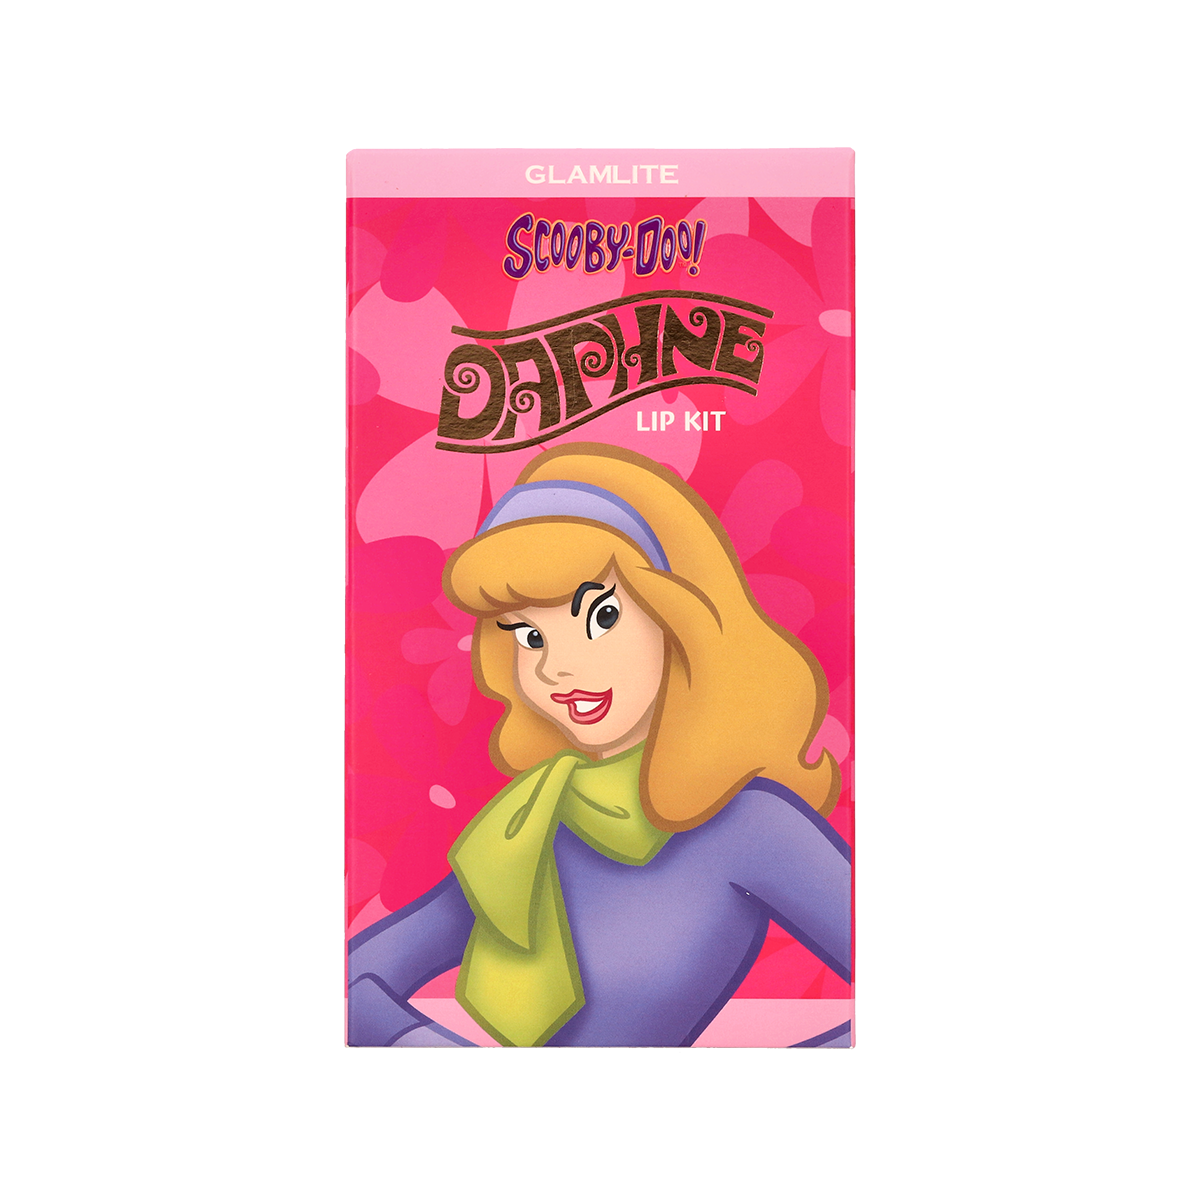 Scooby-Doo x Glamlite Daphne Lip Kit